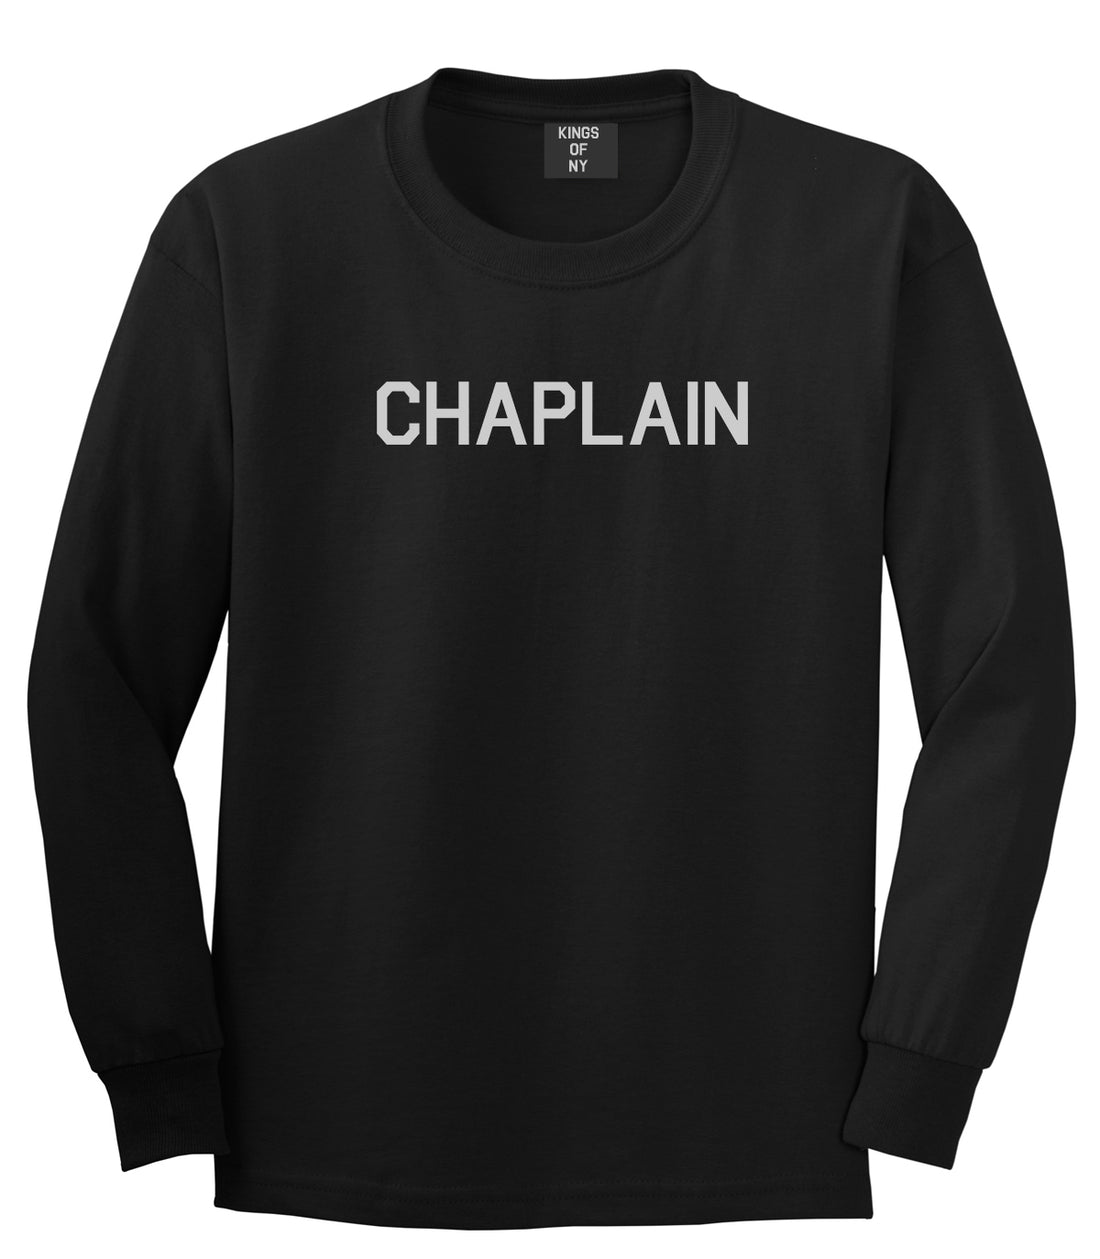 Christian Chaplain Black Long Sleeve T-Shirt by Kings Of NY